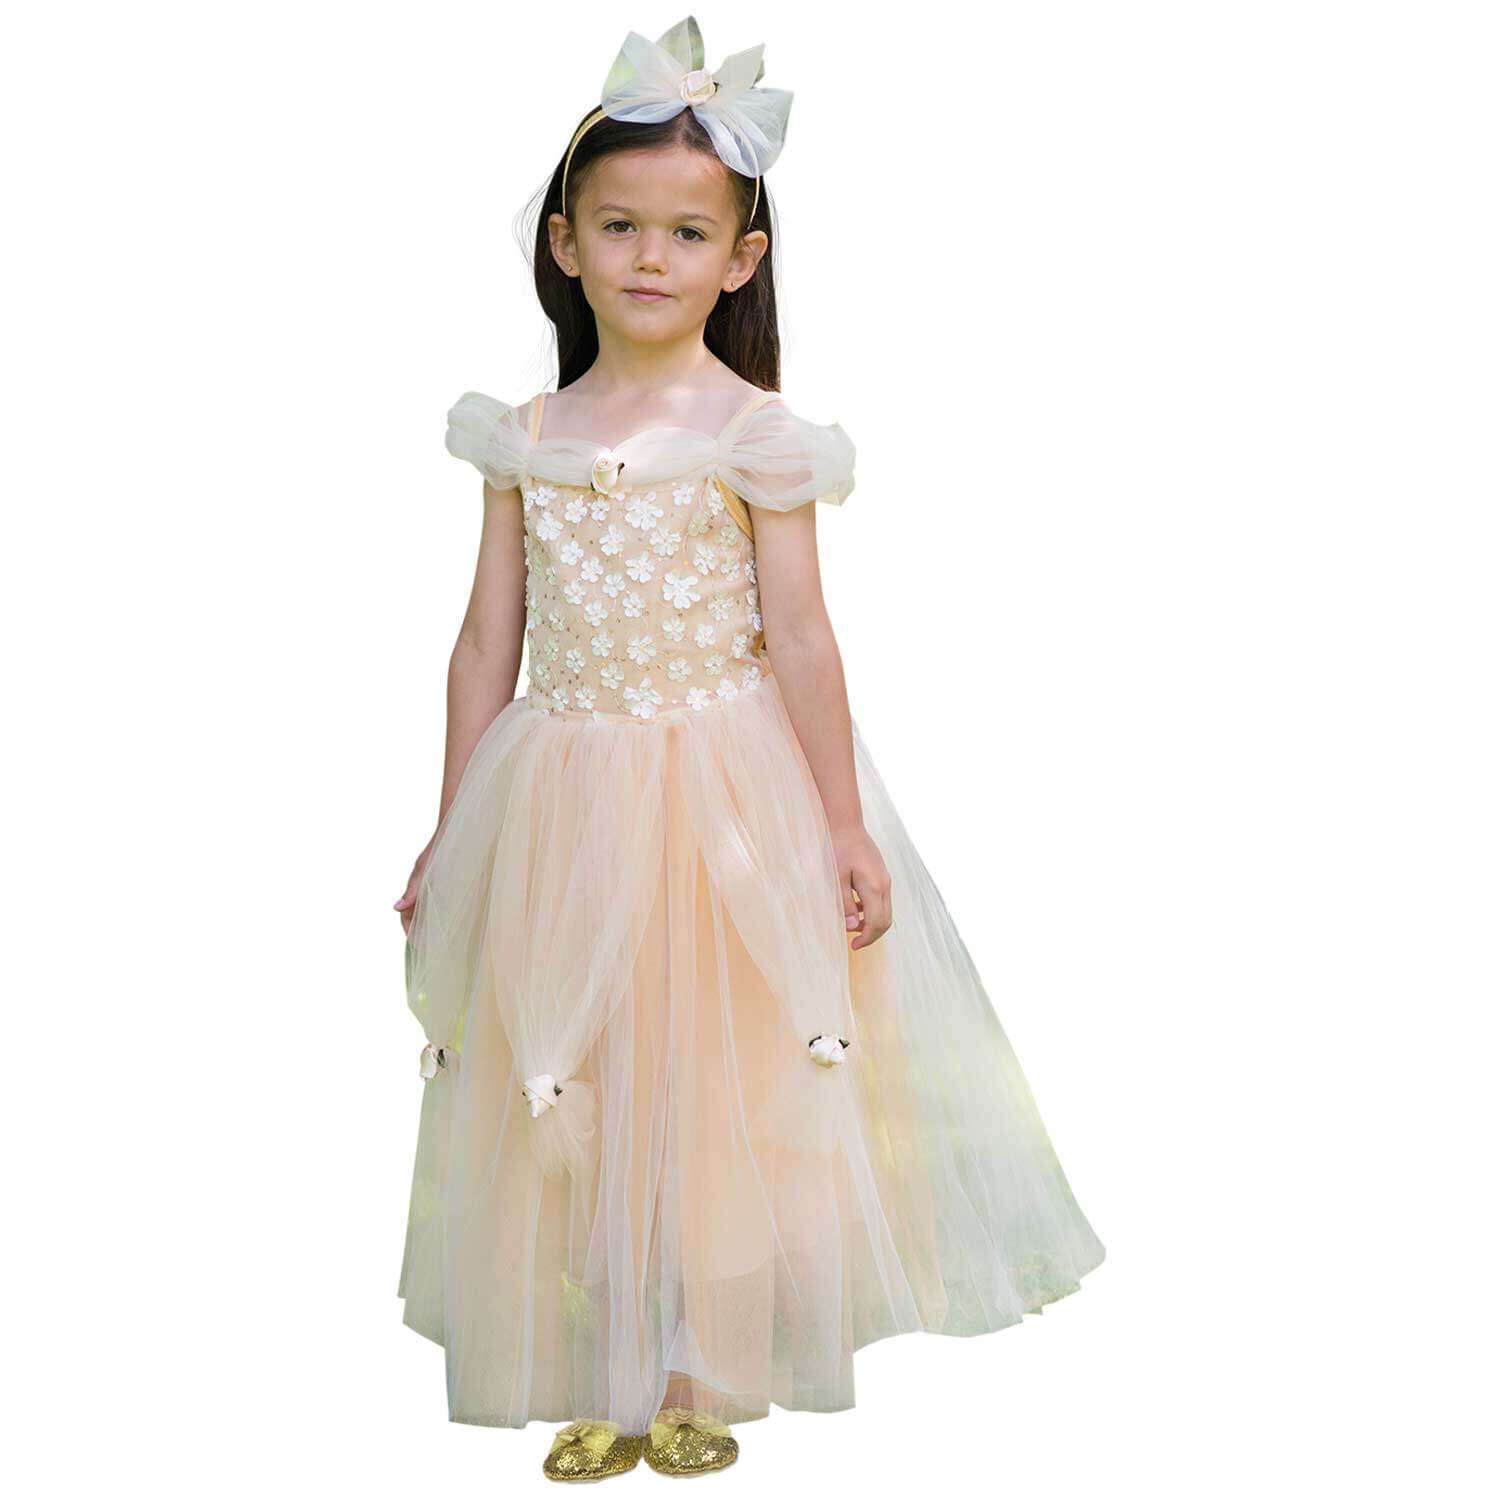 Child Golden Princess Costume Costumes & Apparel - Party Centre - Party Centre